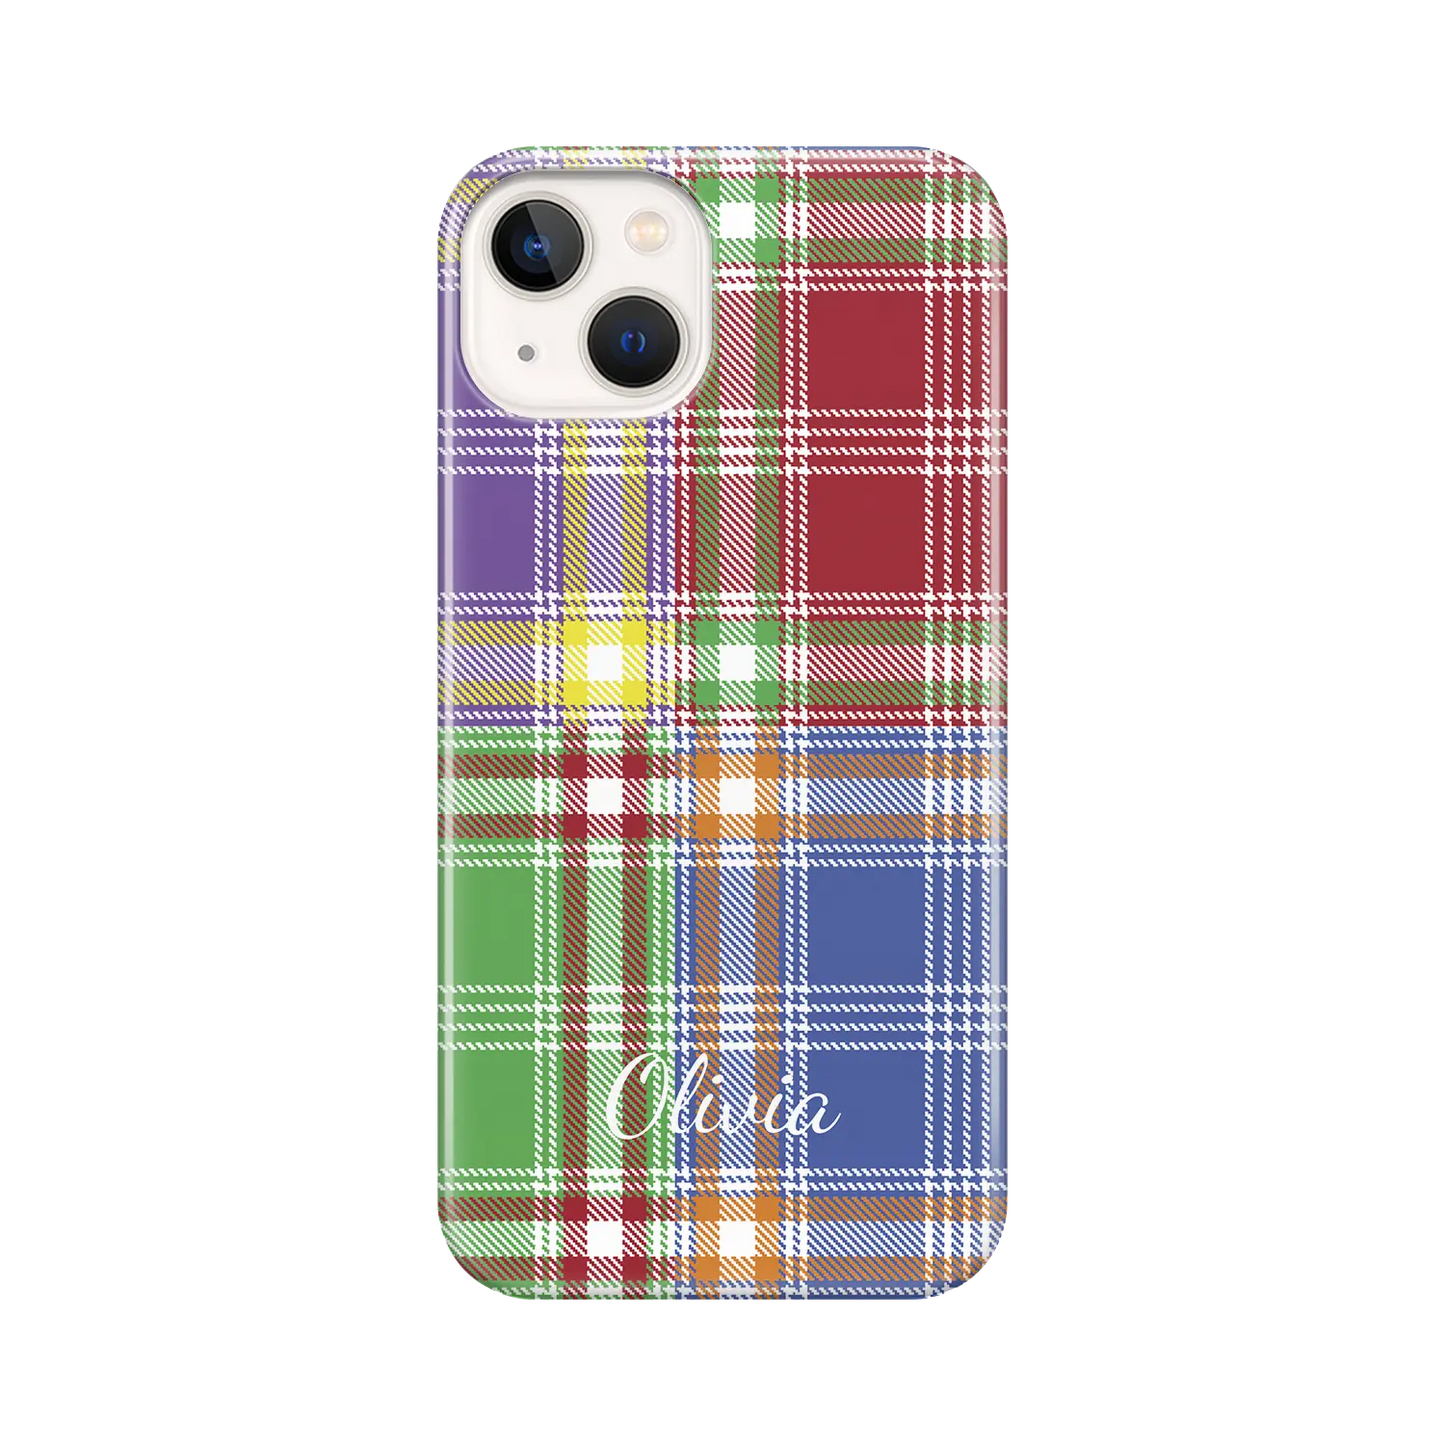 Plaid & Simple - Personalised iPhone Case